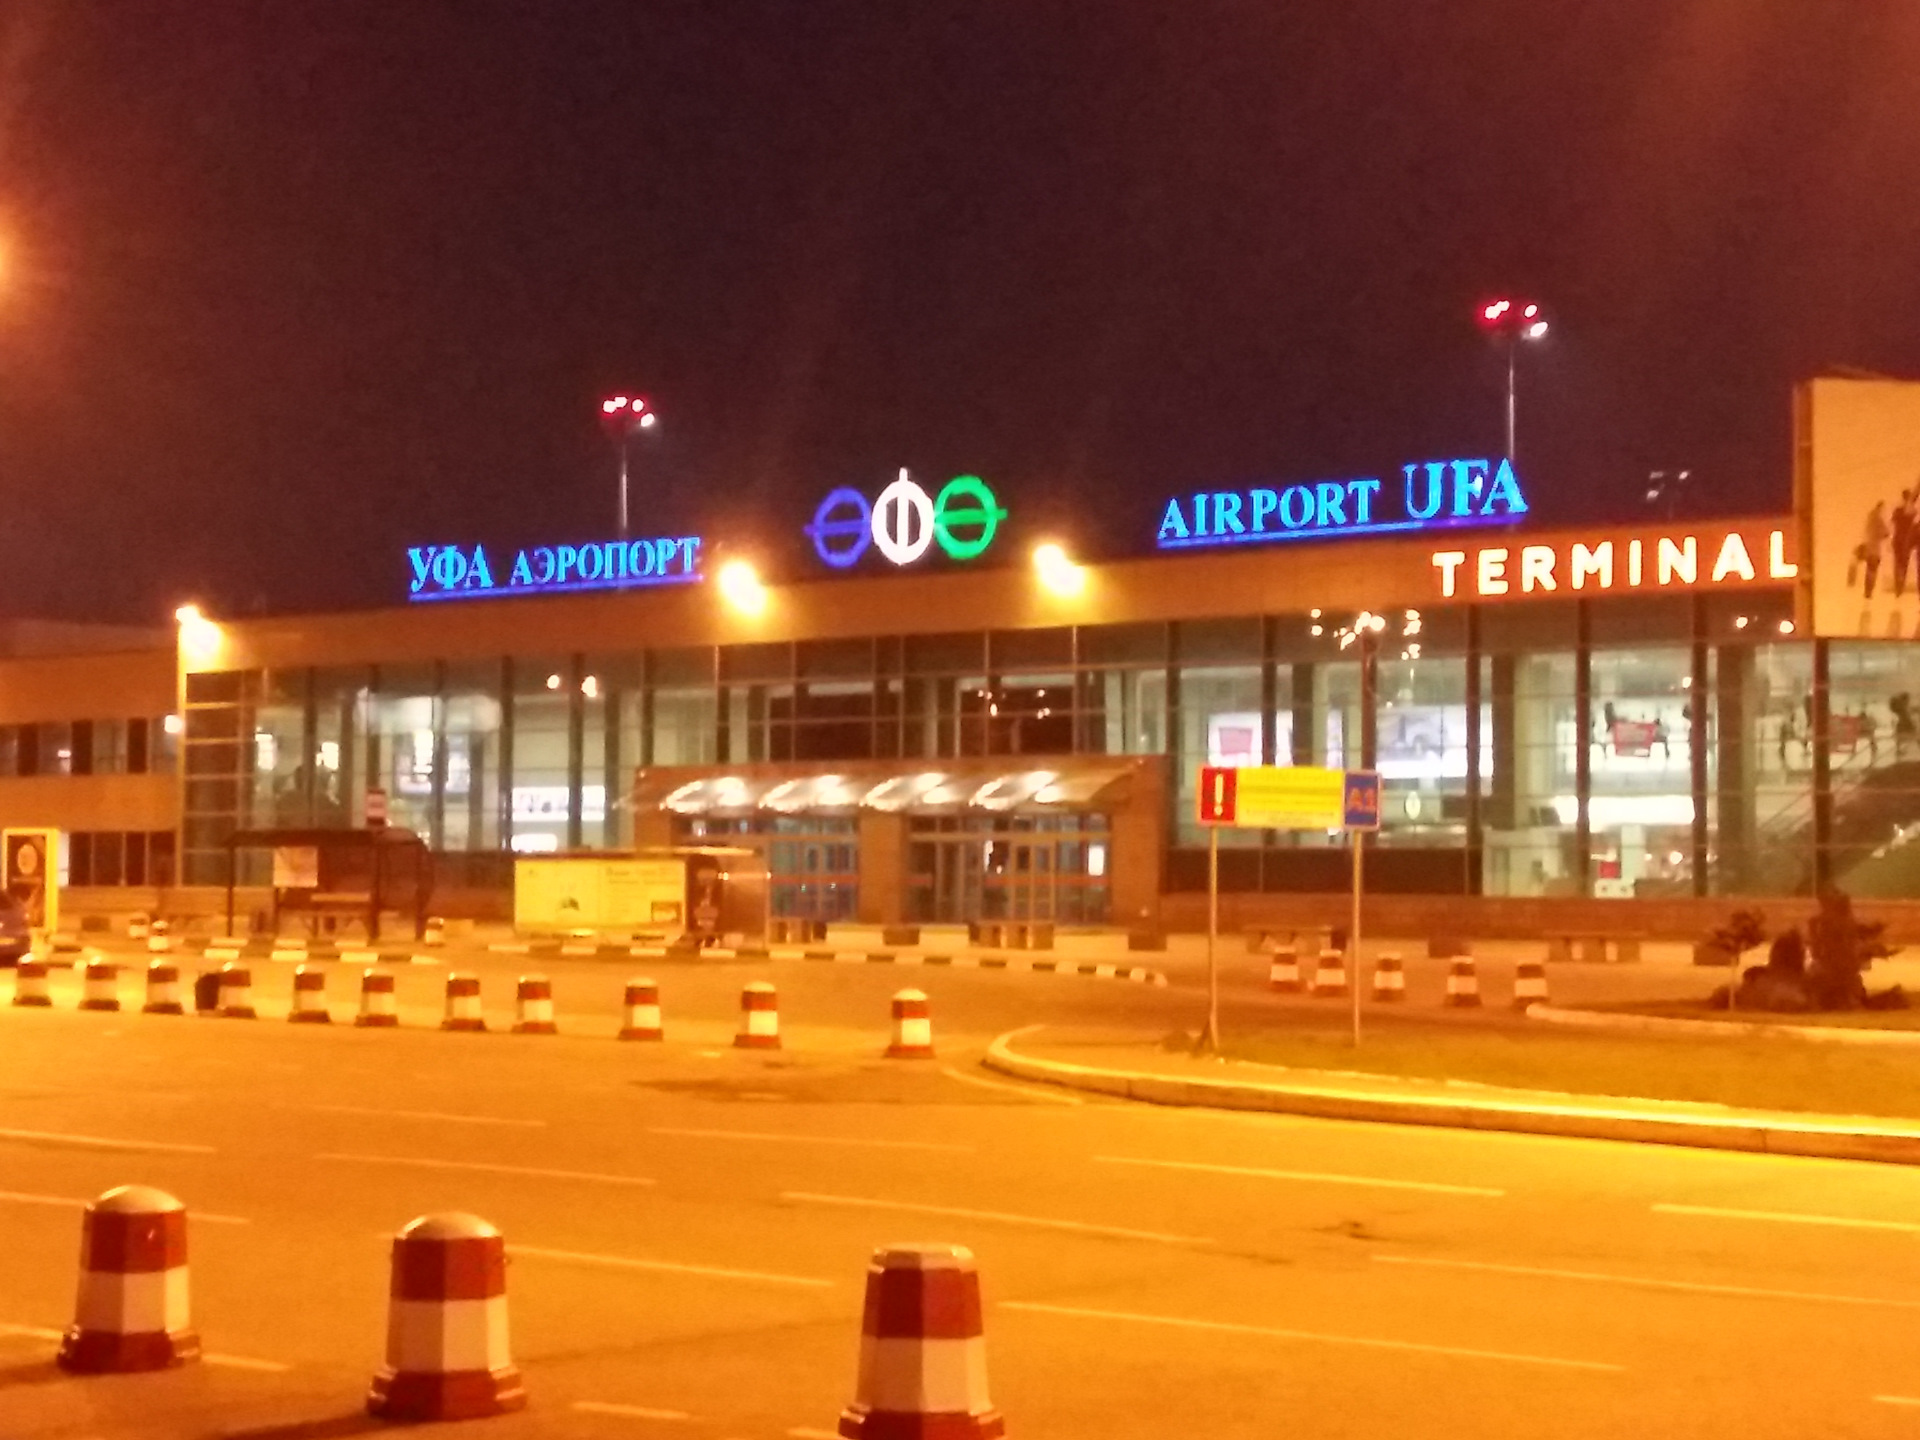 Аэропорт уфа салават. Аэропорт Уфа терминал 2. Уфимский аэропорт терминал 1. Уфа аэропорт терминал 1 и 2. Аэропорт Уфа первый терминал.